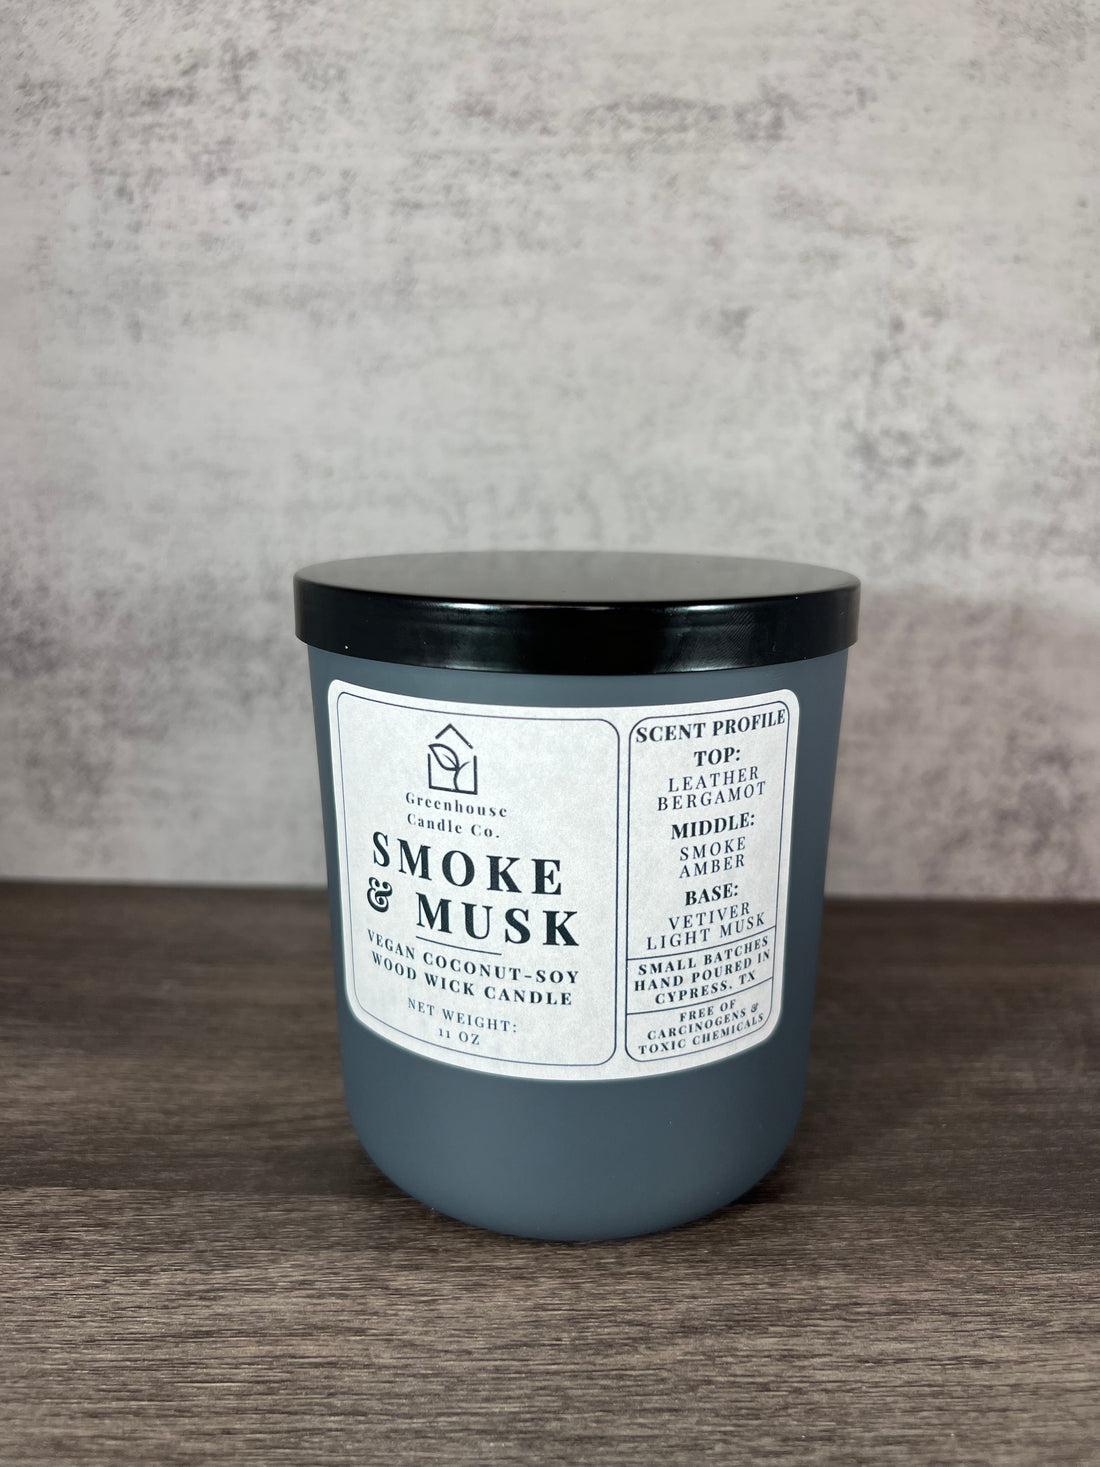 Smoke &amp; Musk - Greenhouse Candle Co. - 